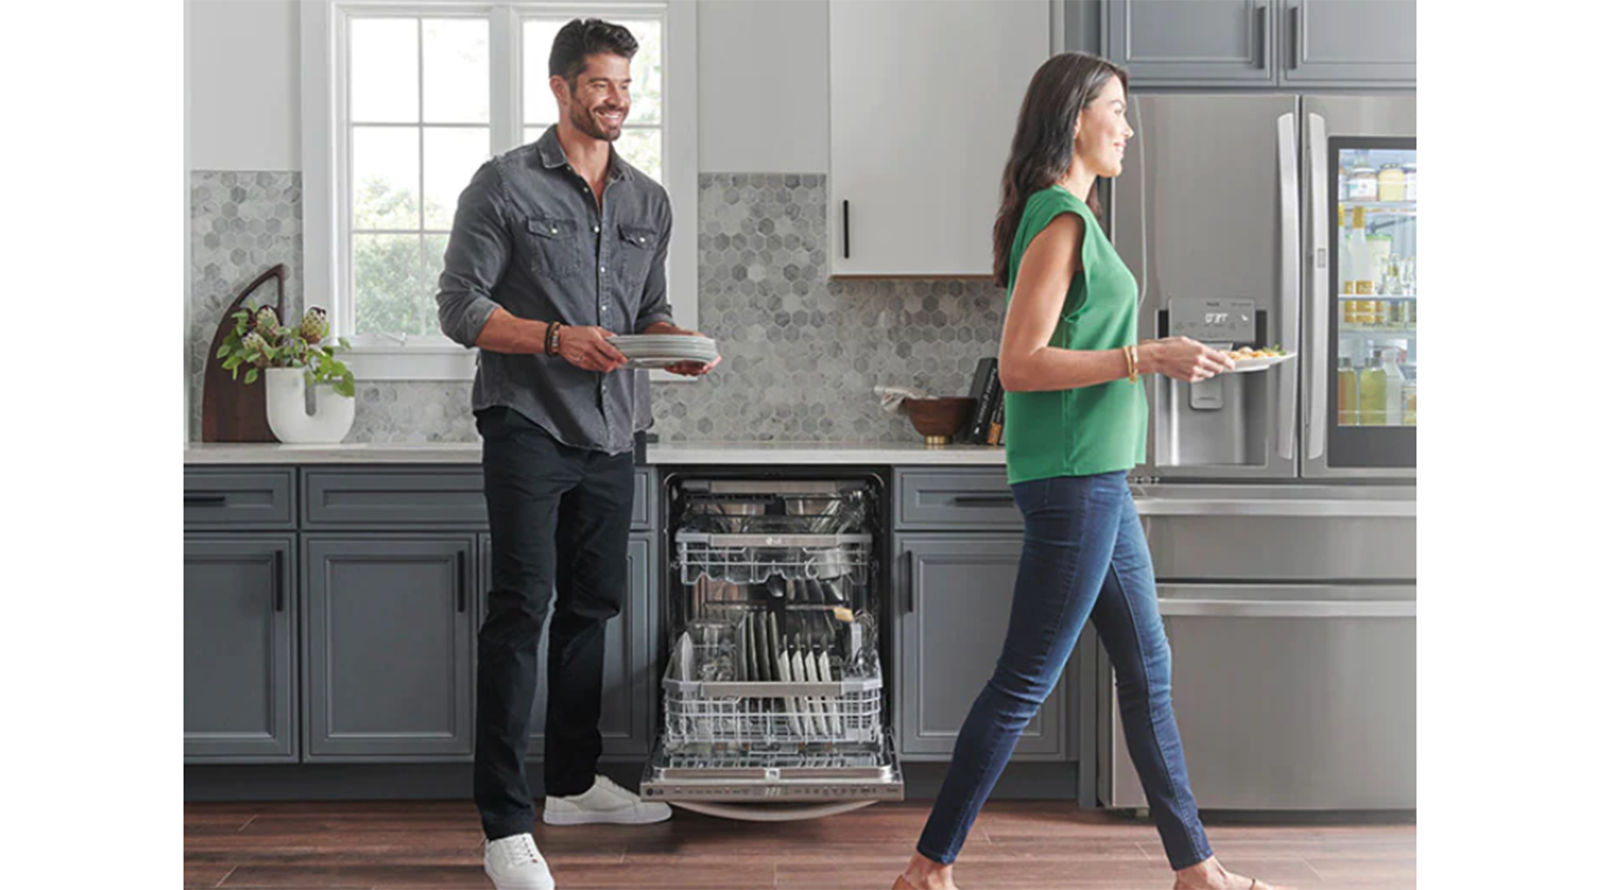 LG Dishwashers Designated 'Most Efficient' - YourSource News